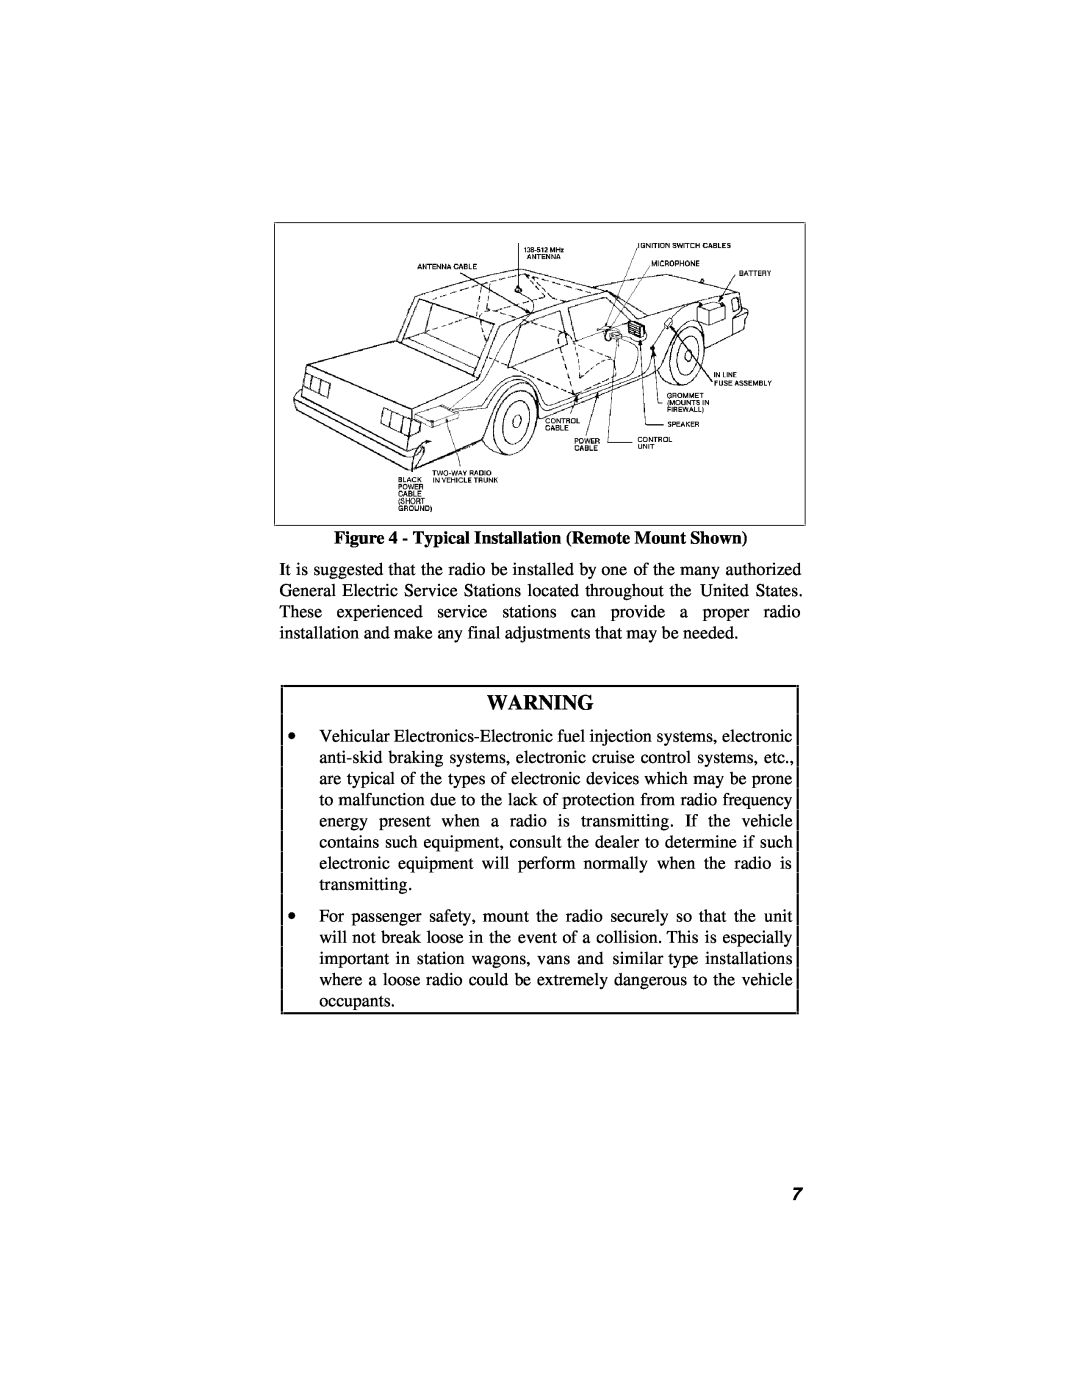 Ericsson 38901E installation manual 